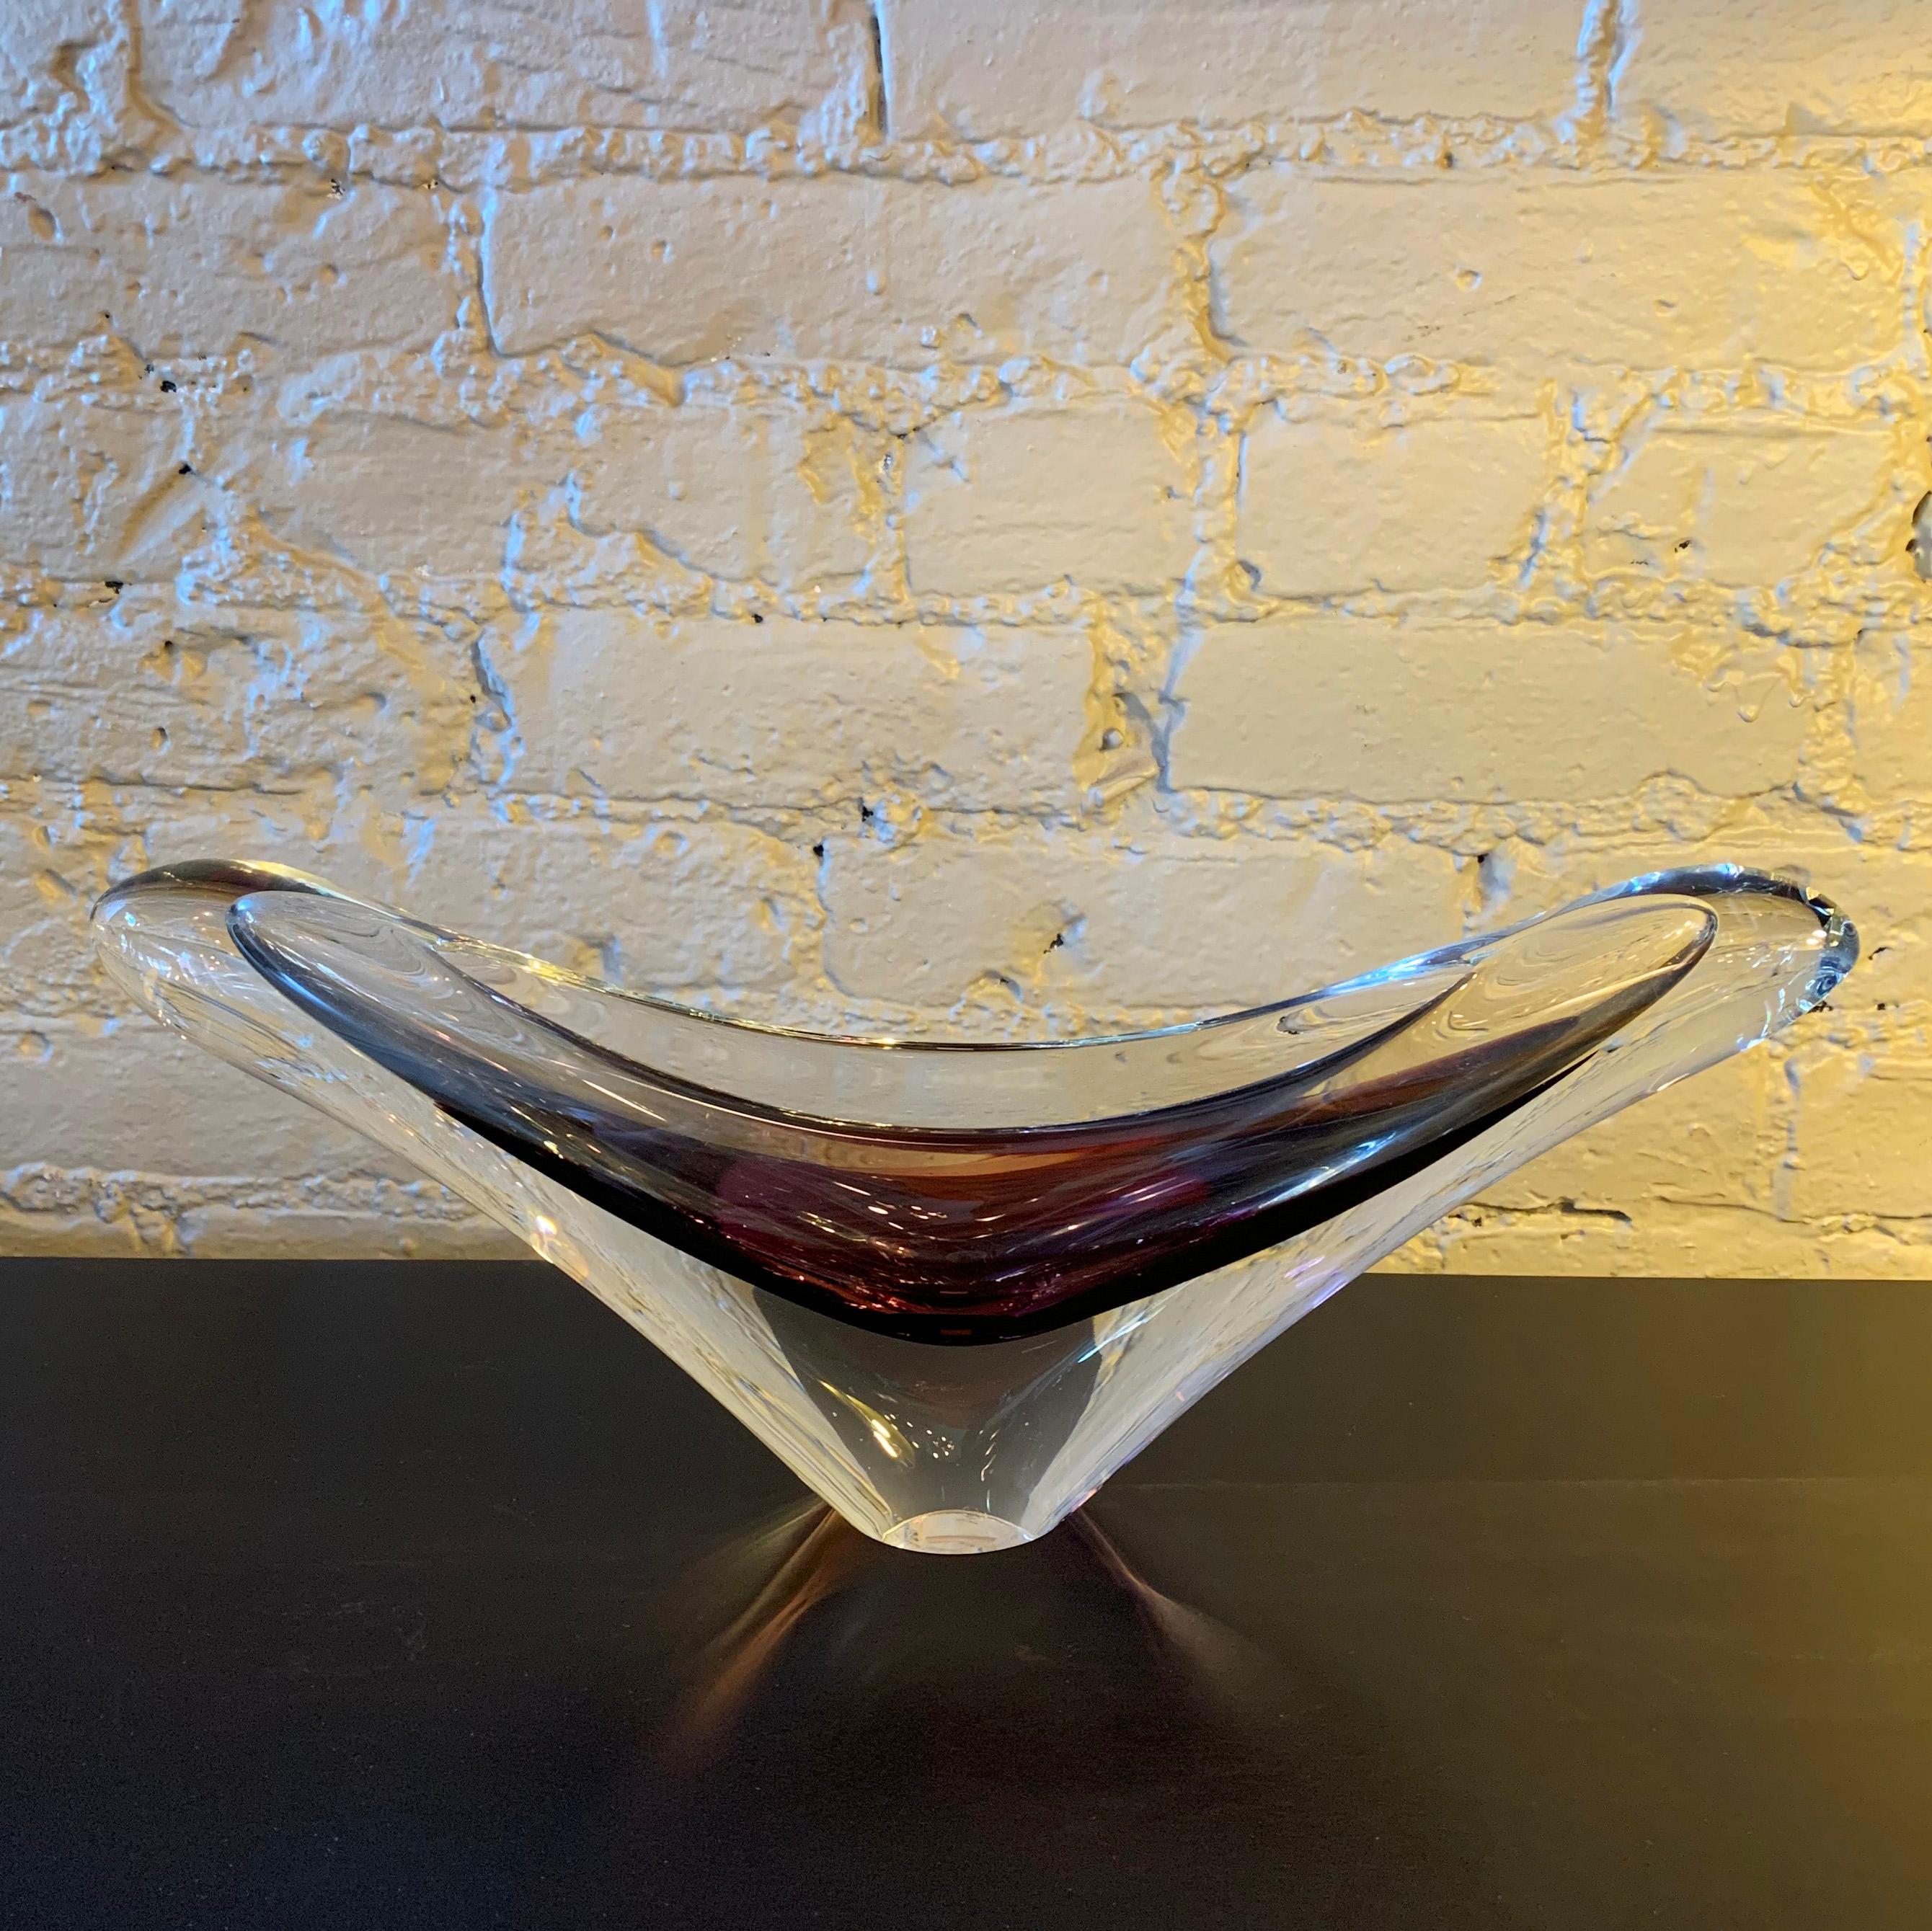 Scandinavian modern, freeform, art glass vase or vessel by Paul Kedelv for Flygsfors, Sweden features a deep amethyst core.